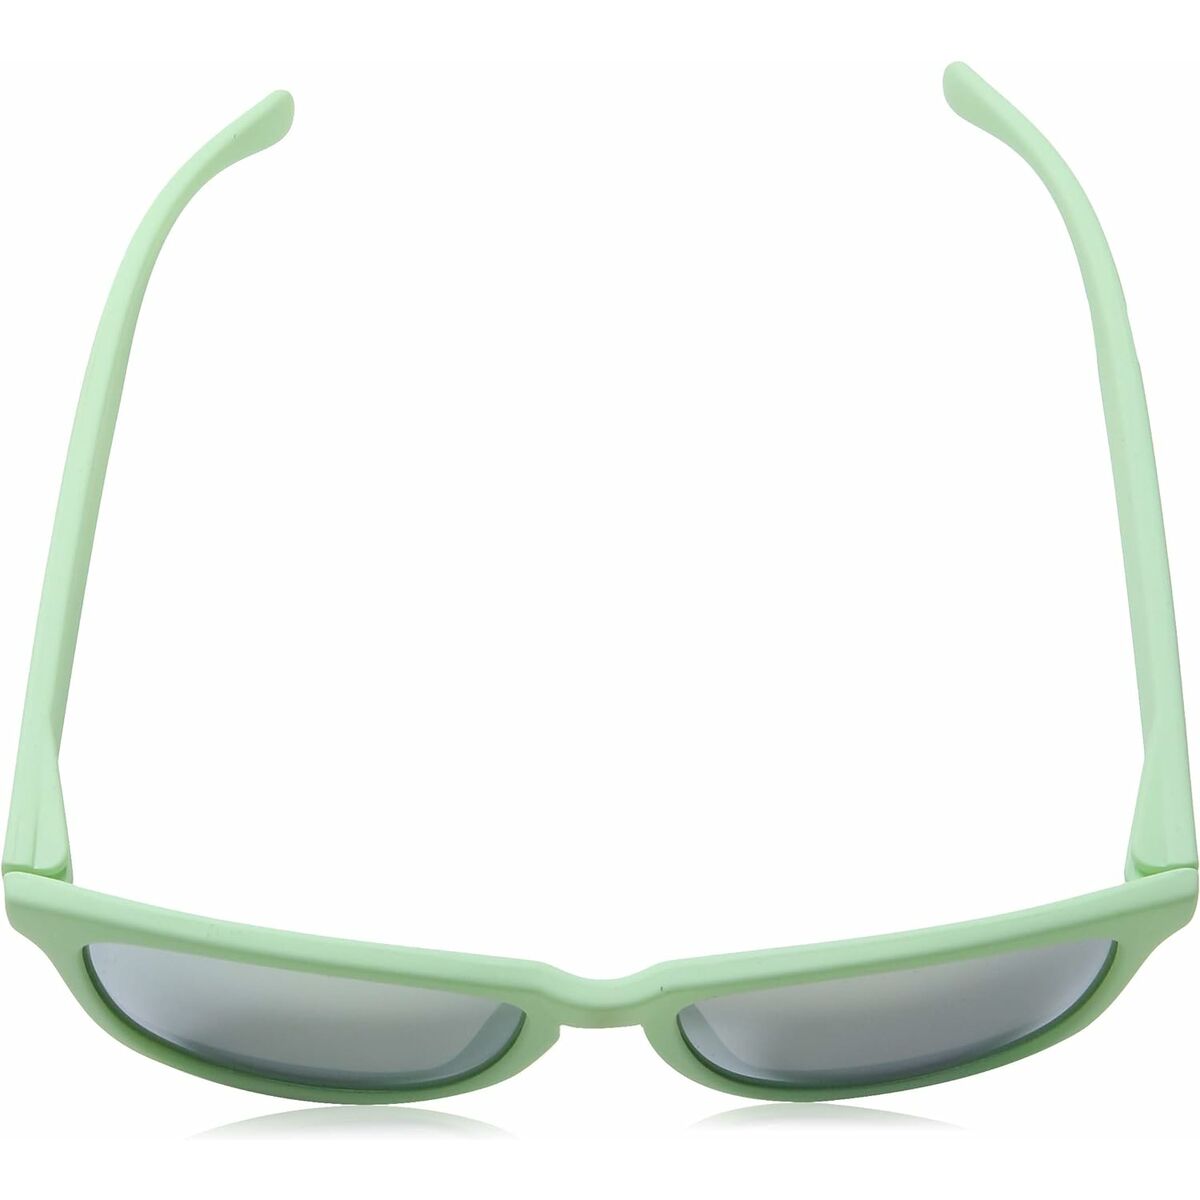 Unisex Sunglasses Northweek Regular Matte Ø 47 mm Yellow Green